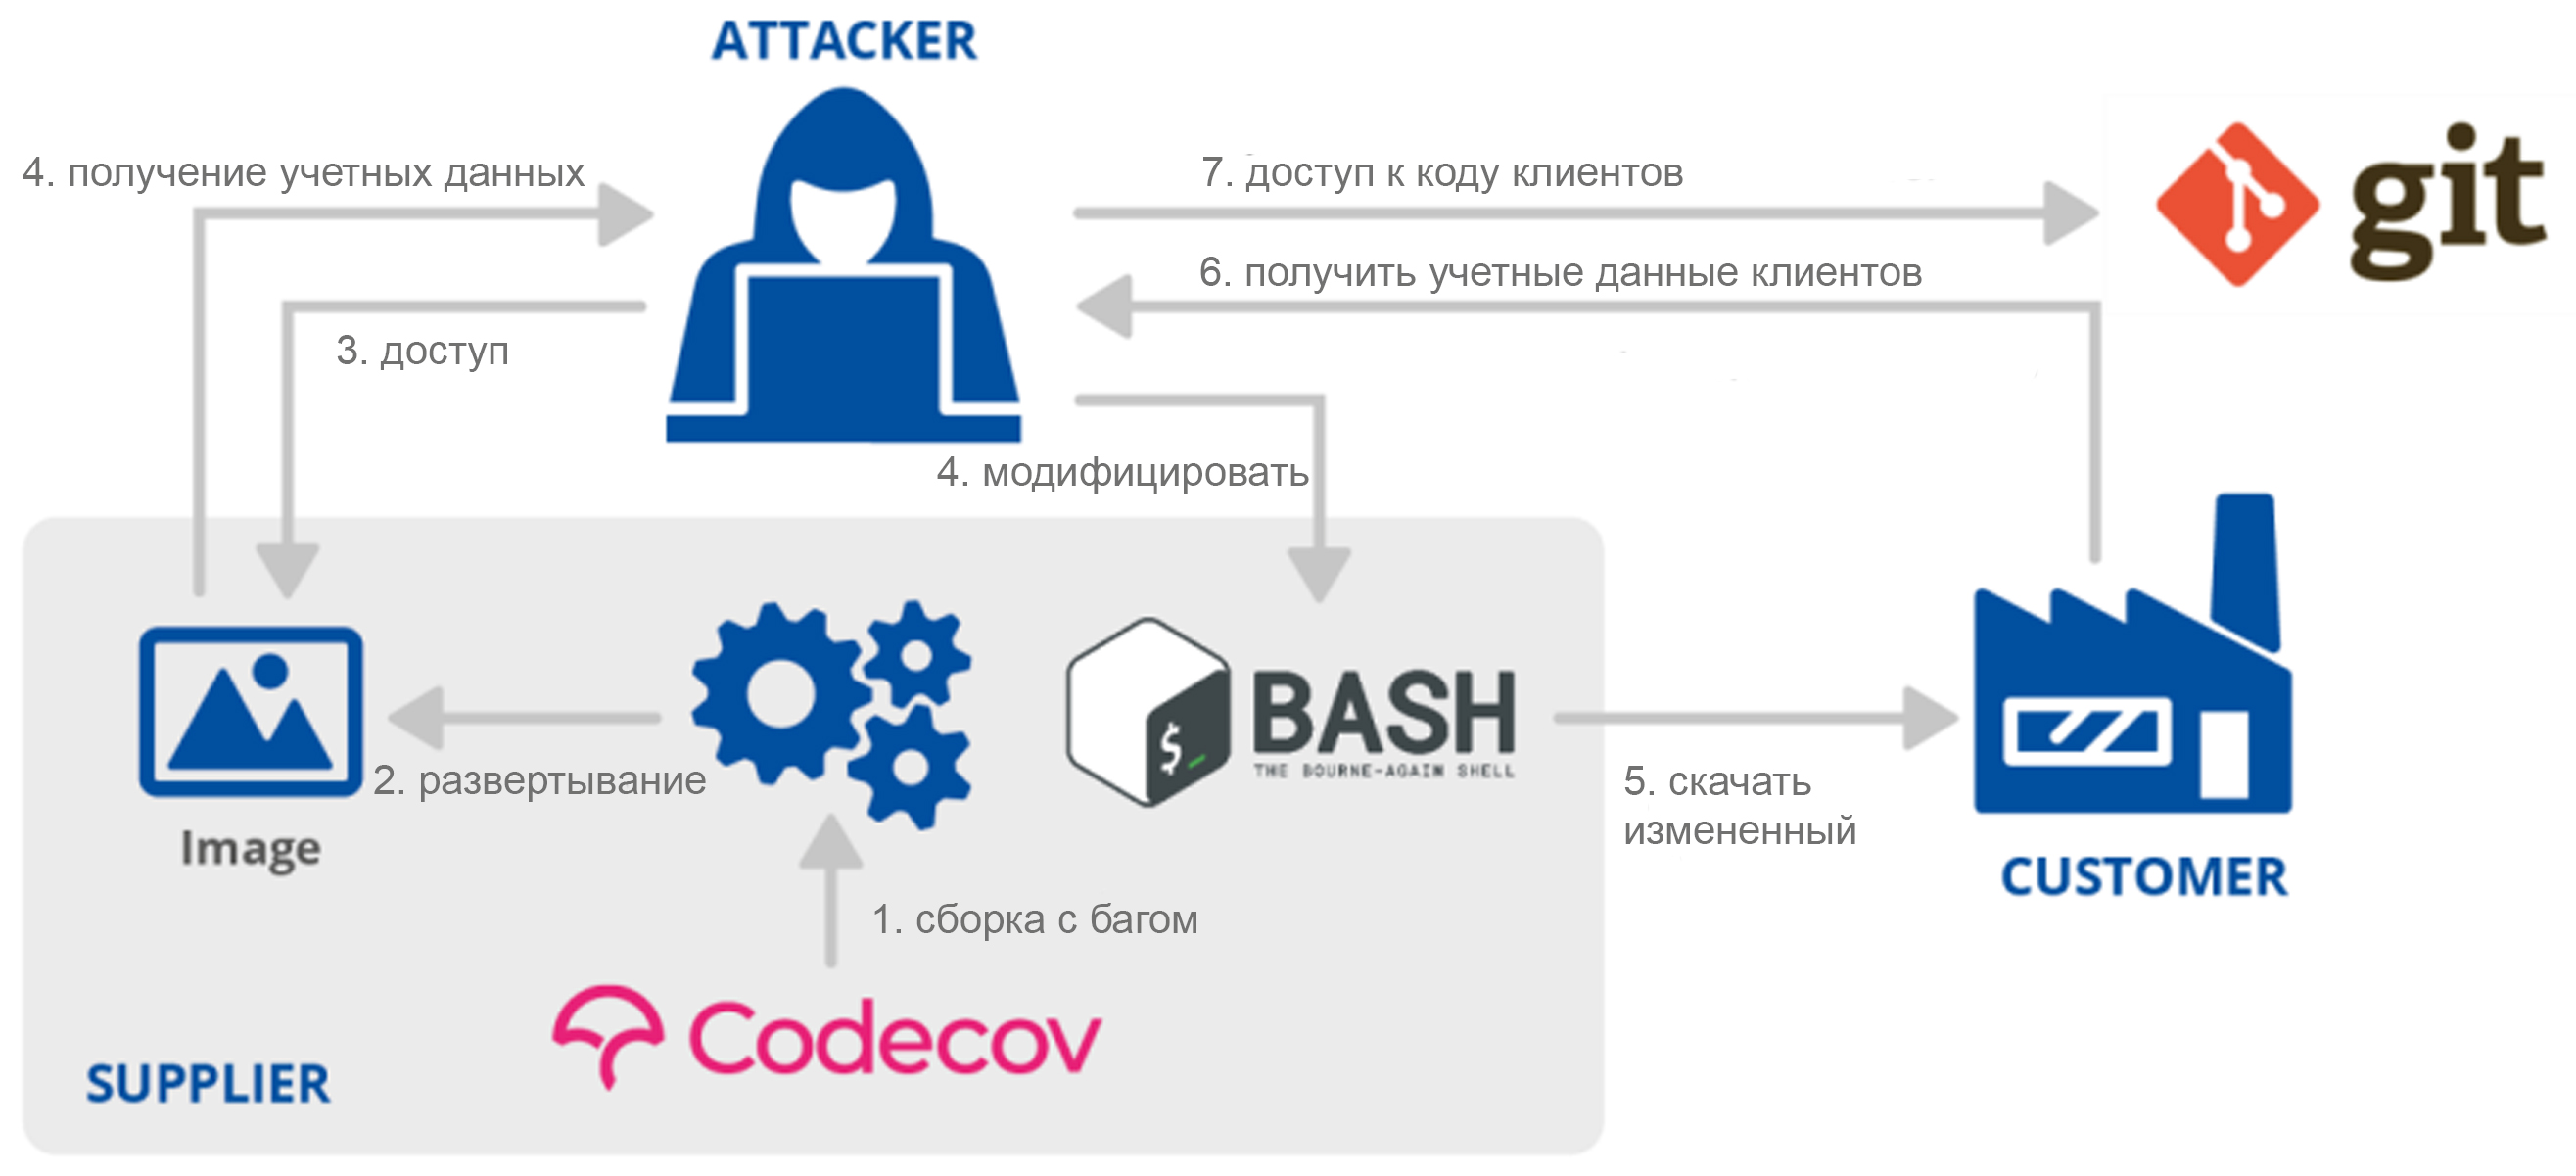 Рисунок 3. Схема работы атаки на цепочку поставок Codecov.